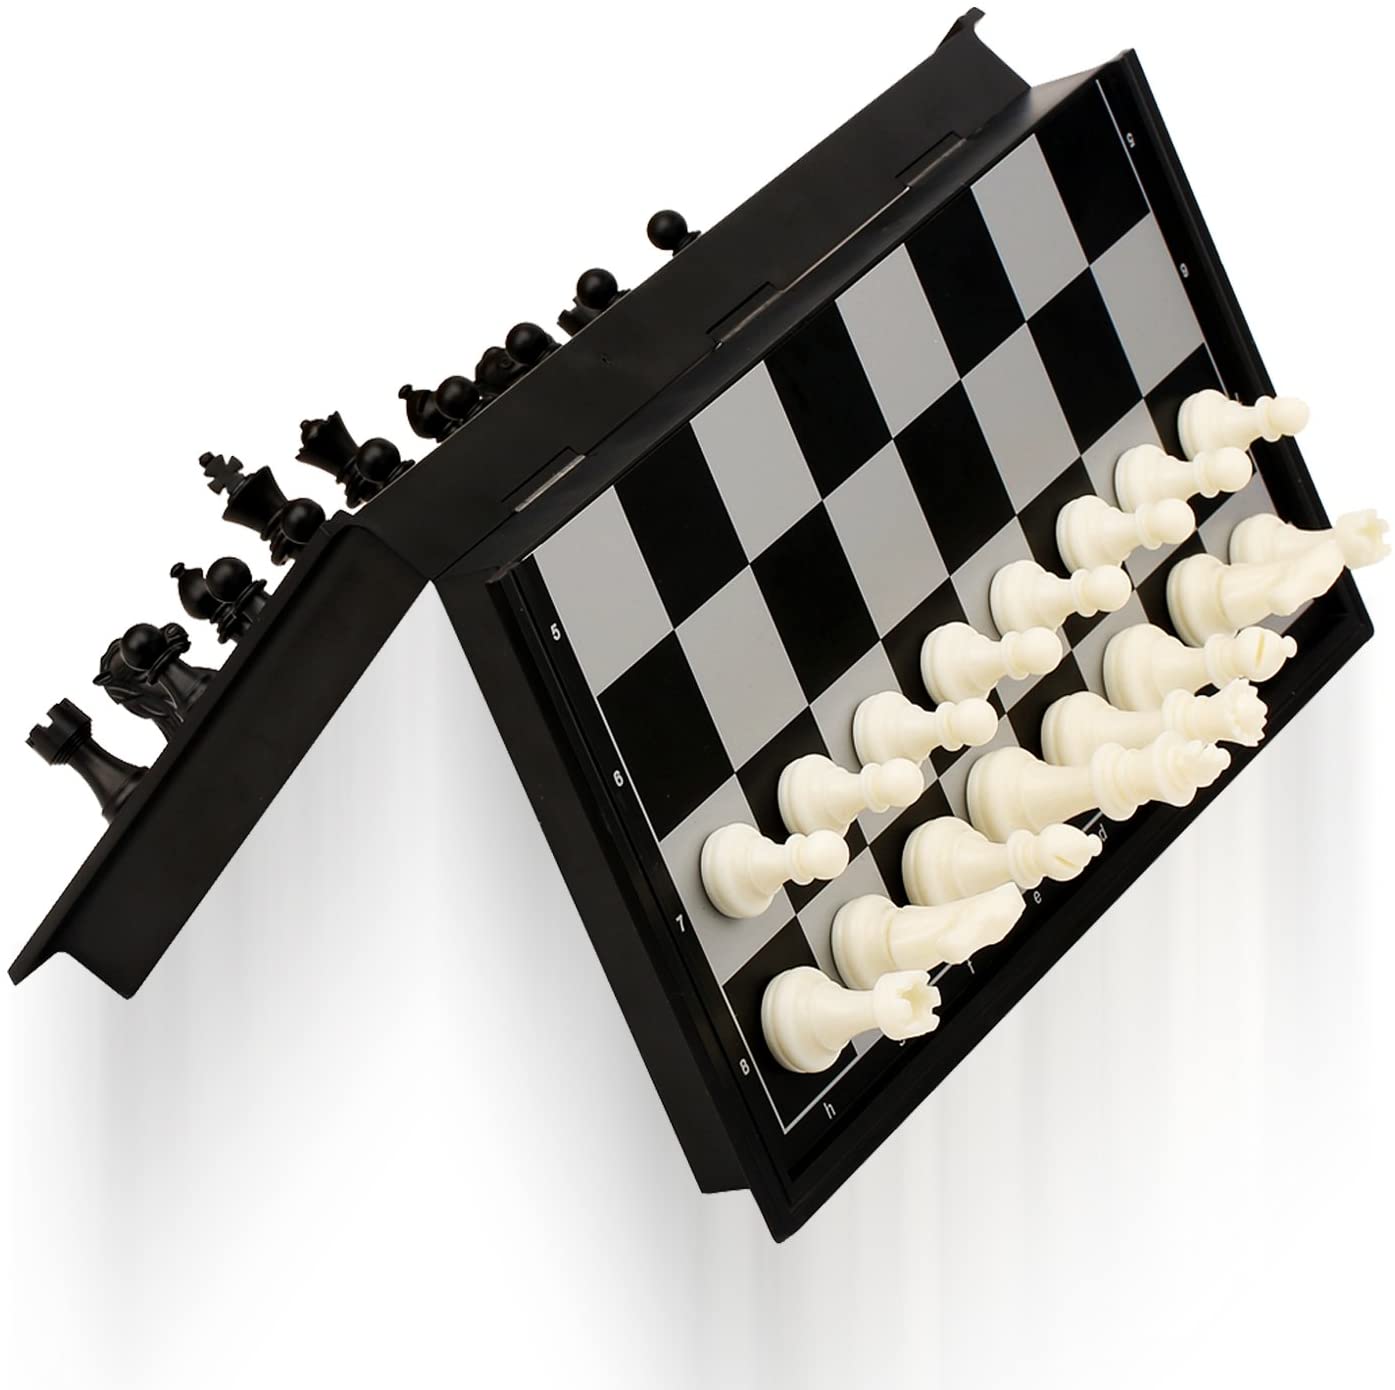 Magnetic Chess Travel Set